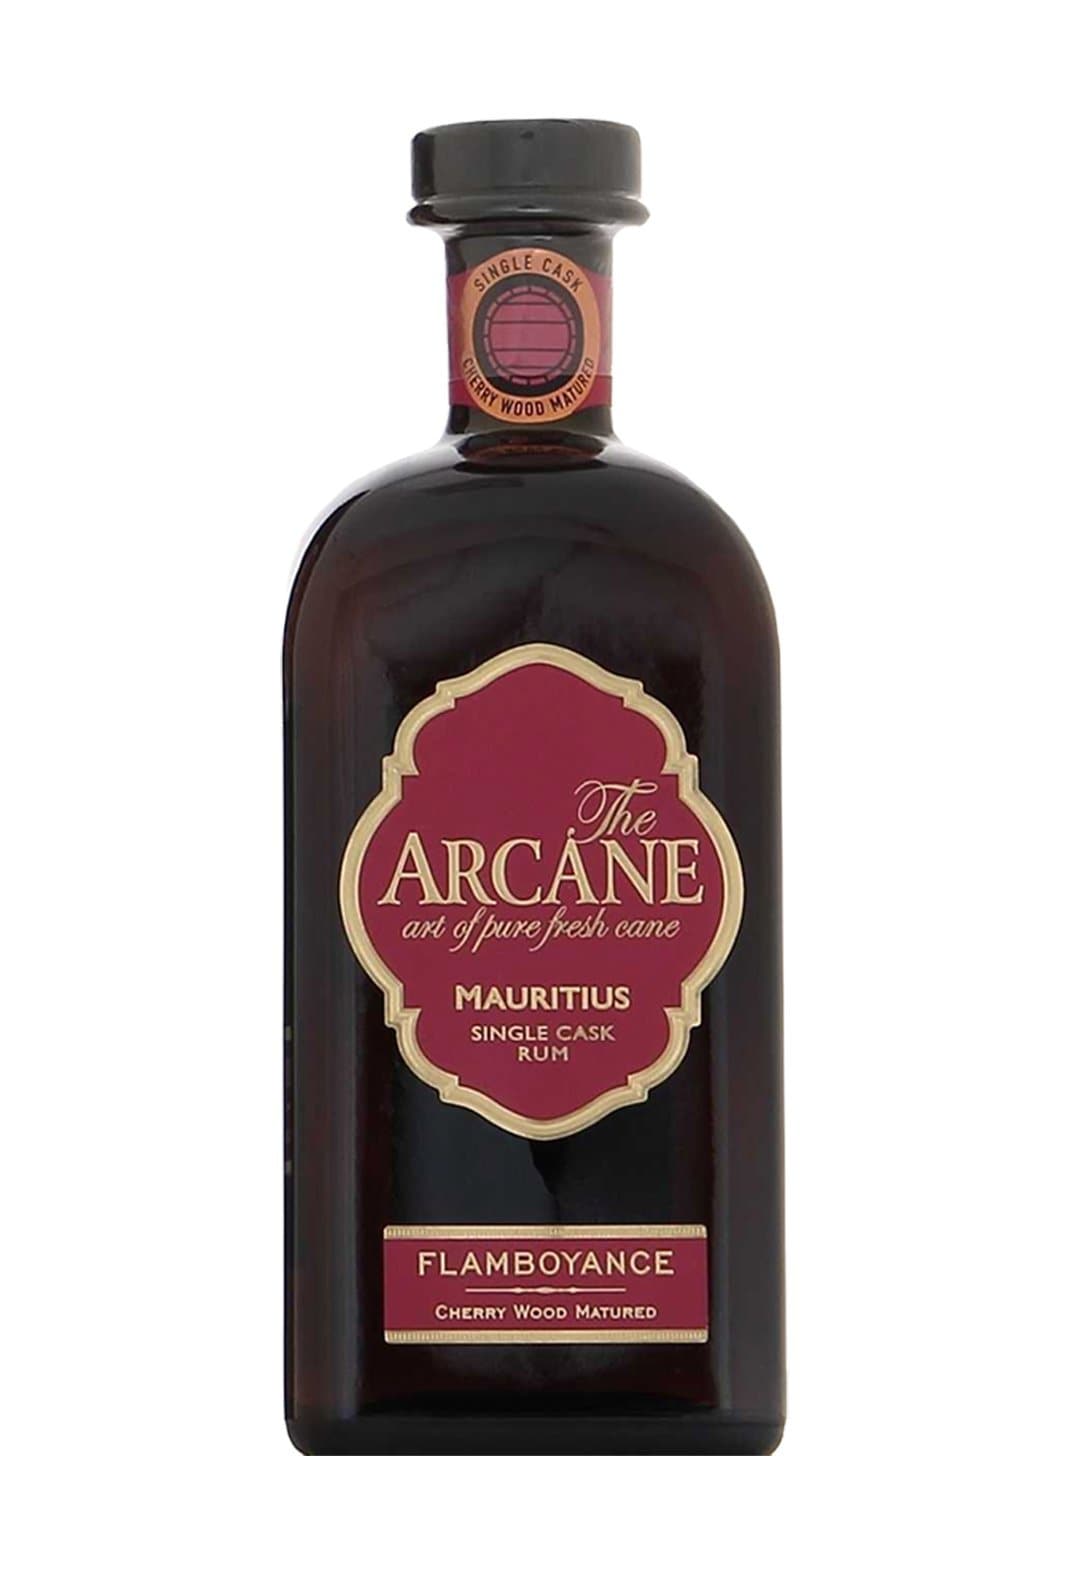 Arcane Flamboyance (Cherry Wood Matured) Rum 40% 700ml | Rum | Shop online at Spirits of France